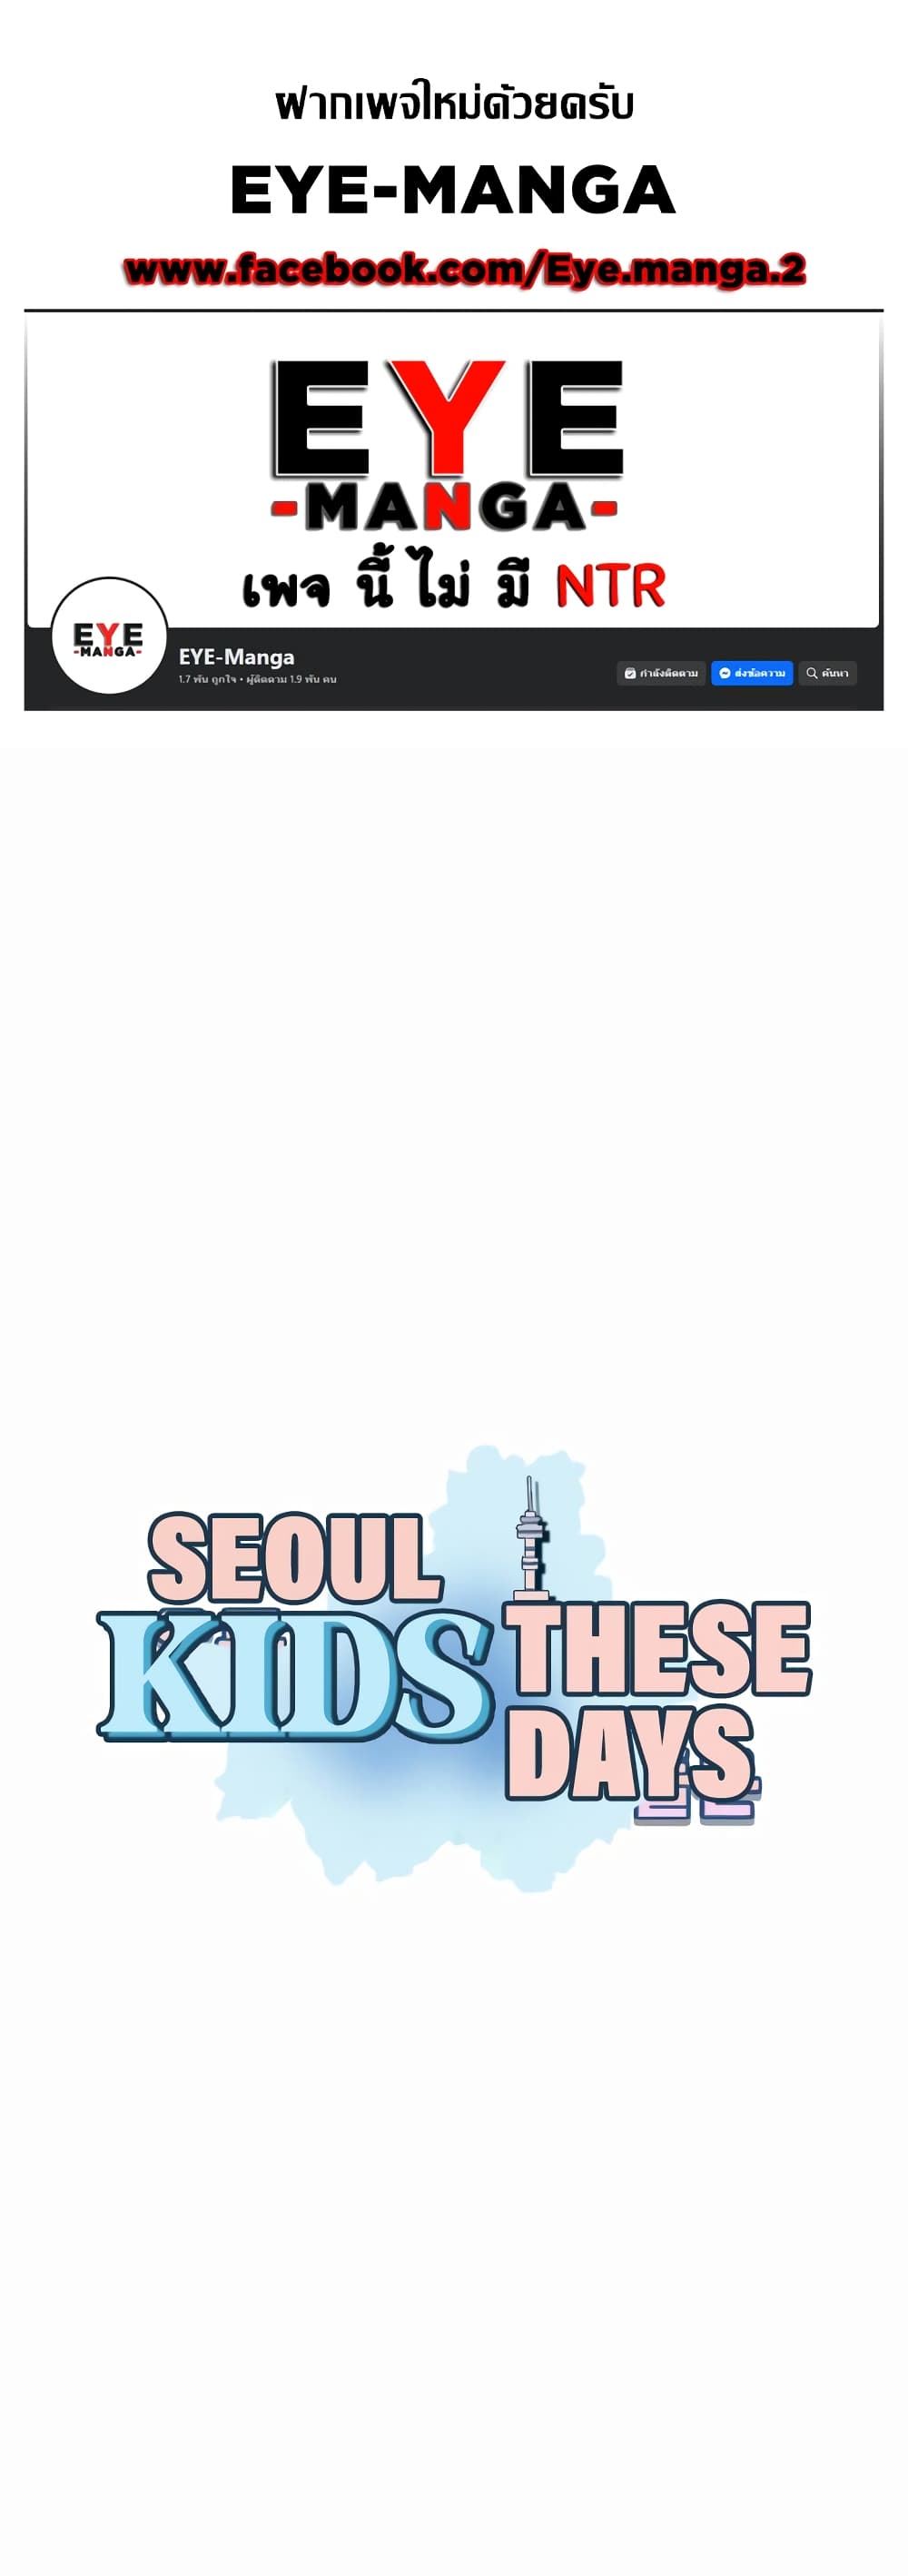 Seoul Kids These Days 27-27